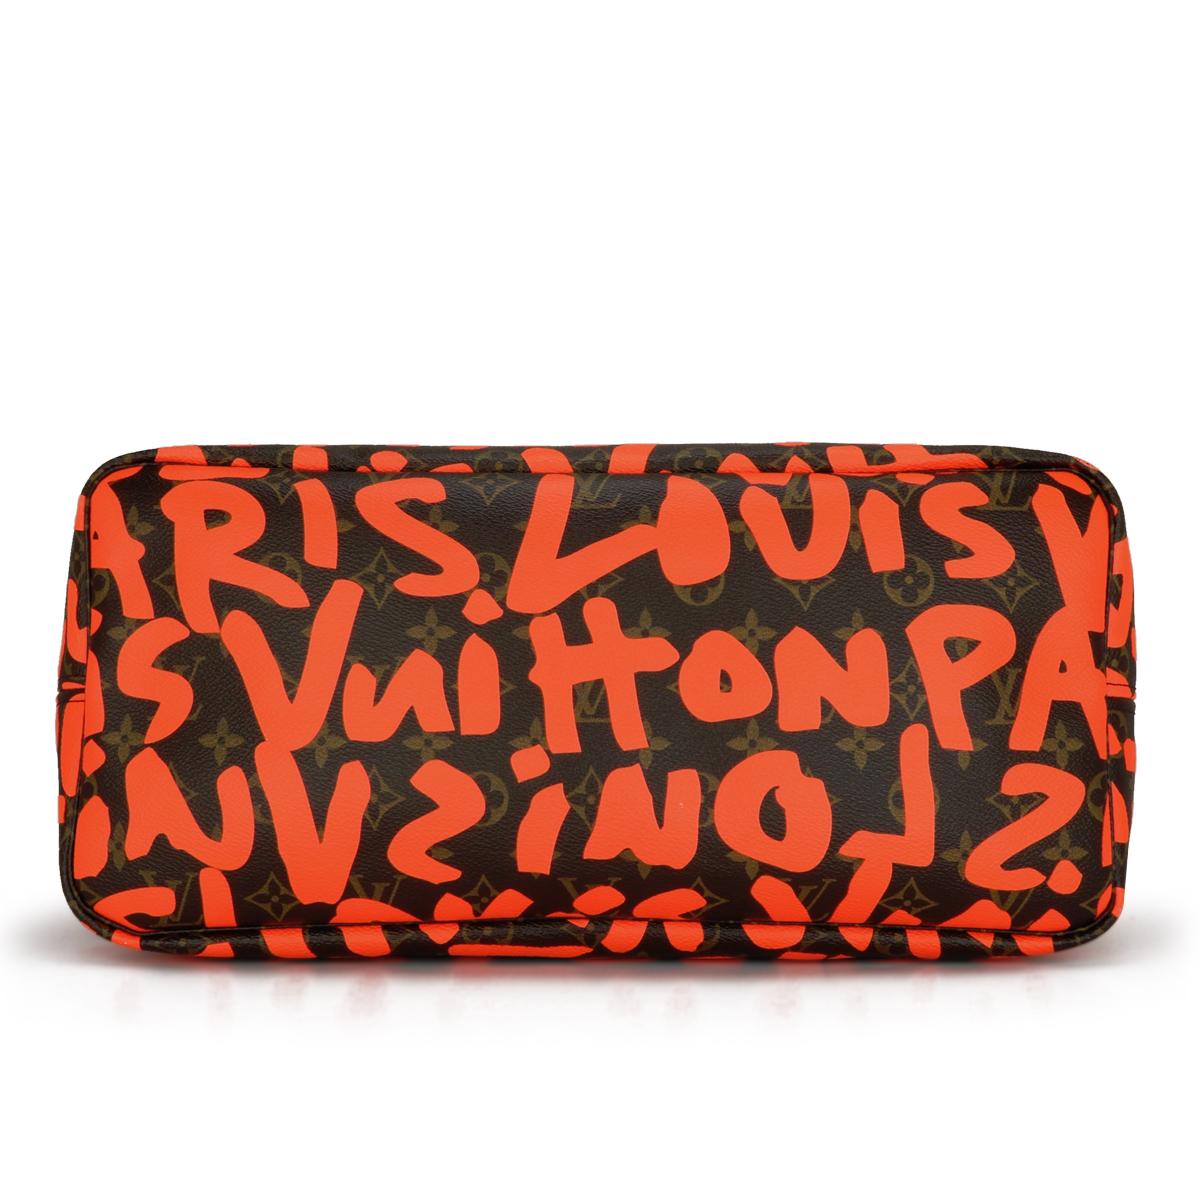 Louis Vuitton Neverfull GM Bag in Monogram Graffiti with Orange Interior 2009 4